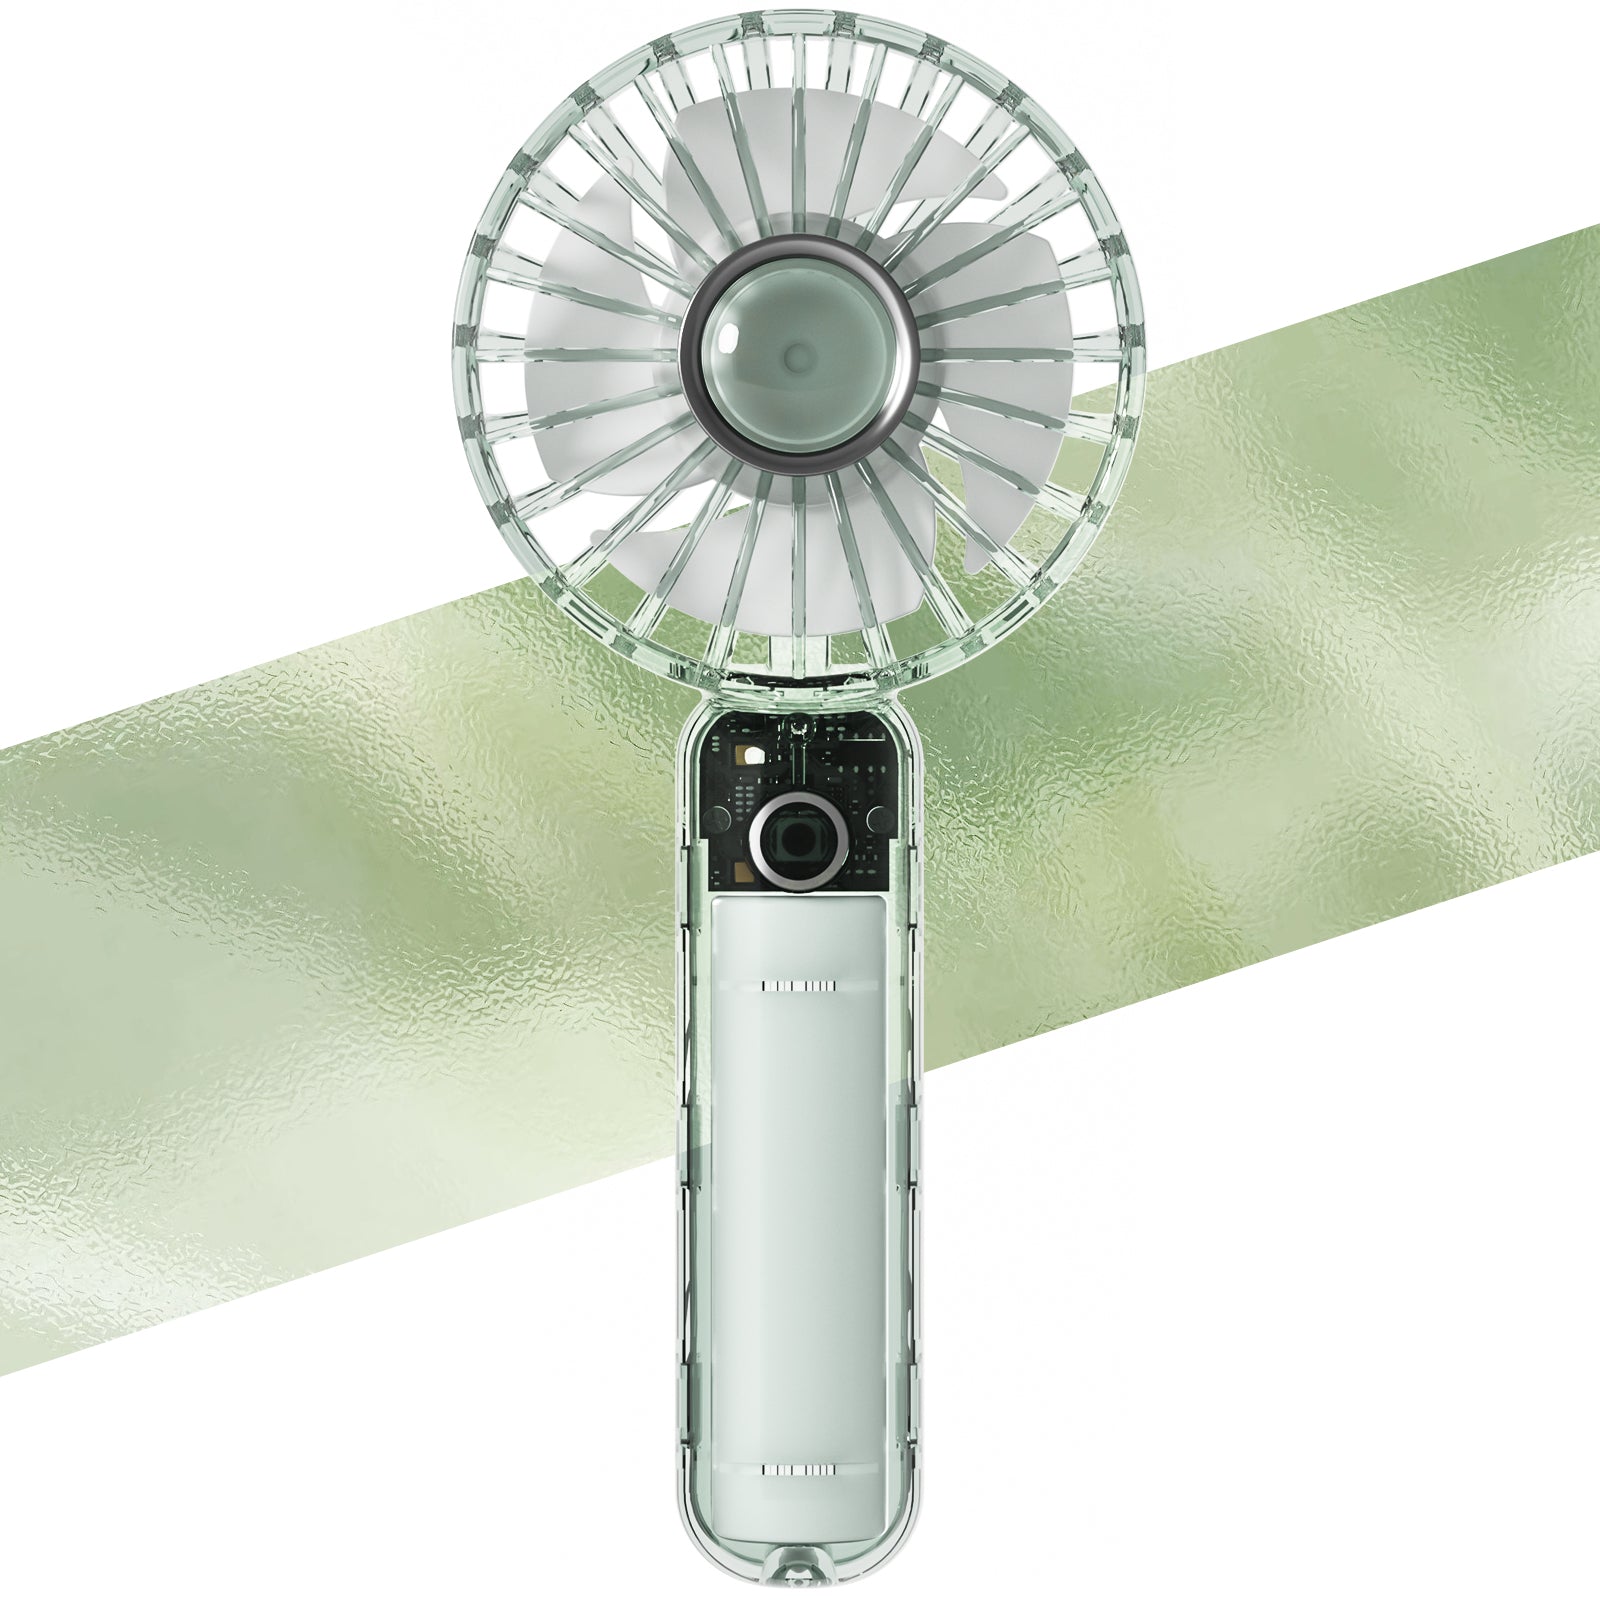 HAGOOGI(ハゴオギ) ハンディファン ハンディ扇風機 透明設計 おしゃれ 携帯扇風機 手持ち小型扇風機 ミニ扇風機 usb 扇風機 静音設計 ミニファン USB 強力 風量 涼しい 夏